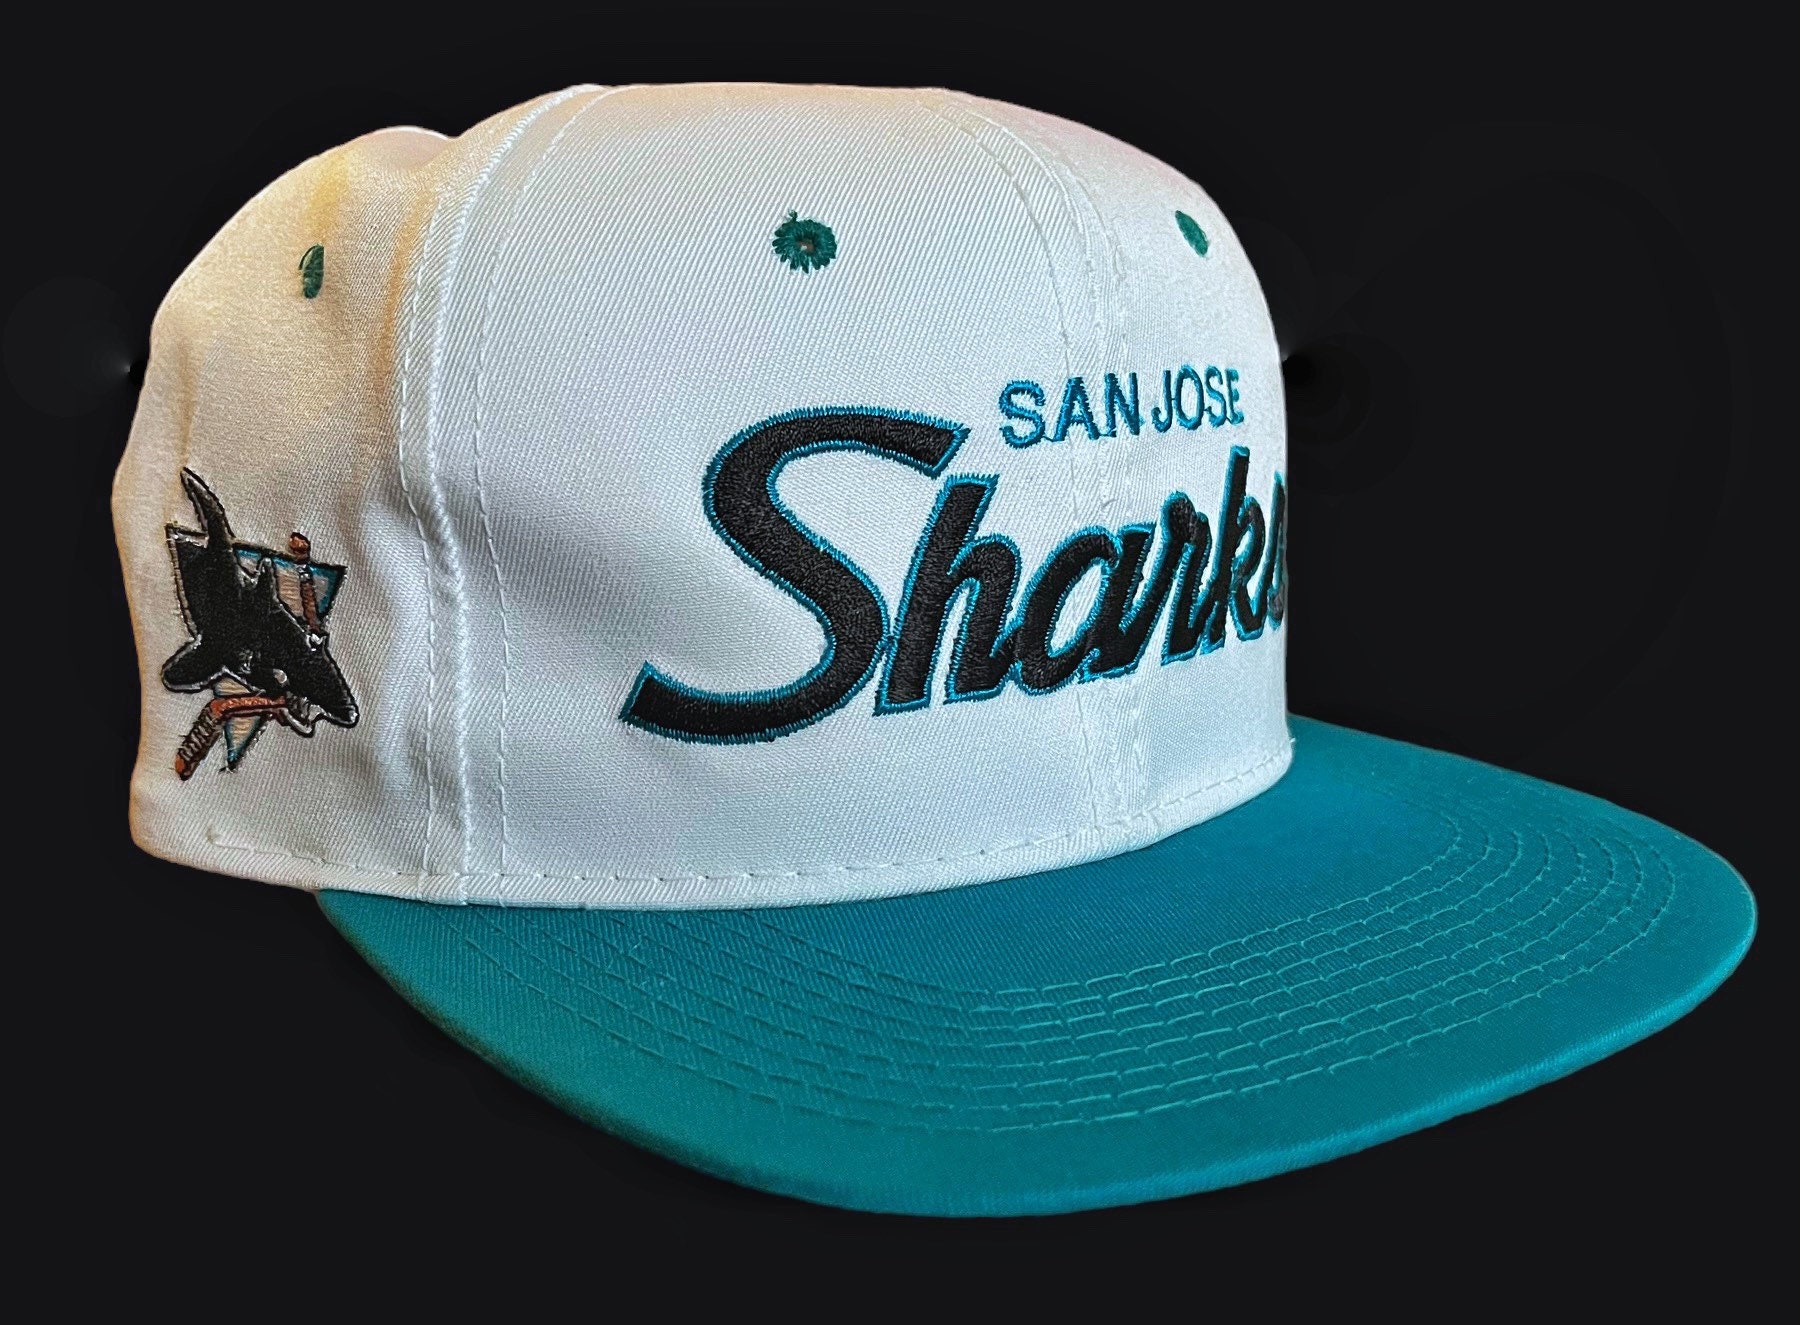 San Jose Sharks Mitchell & Ness Vintage Snapback Hat - Cream/Teal